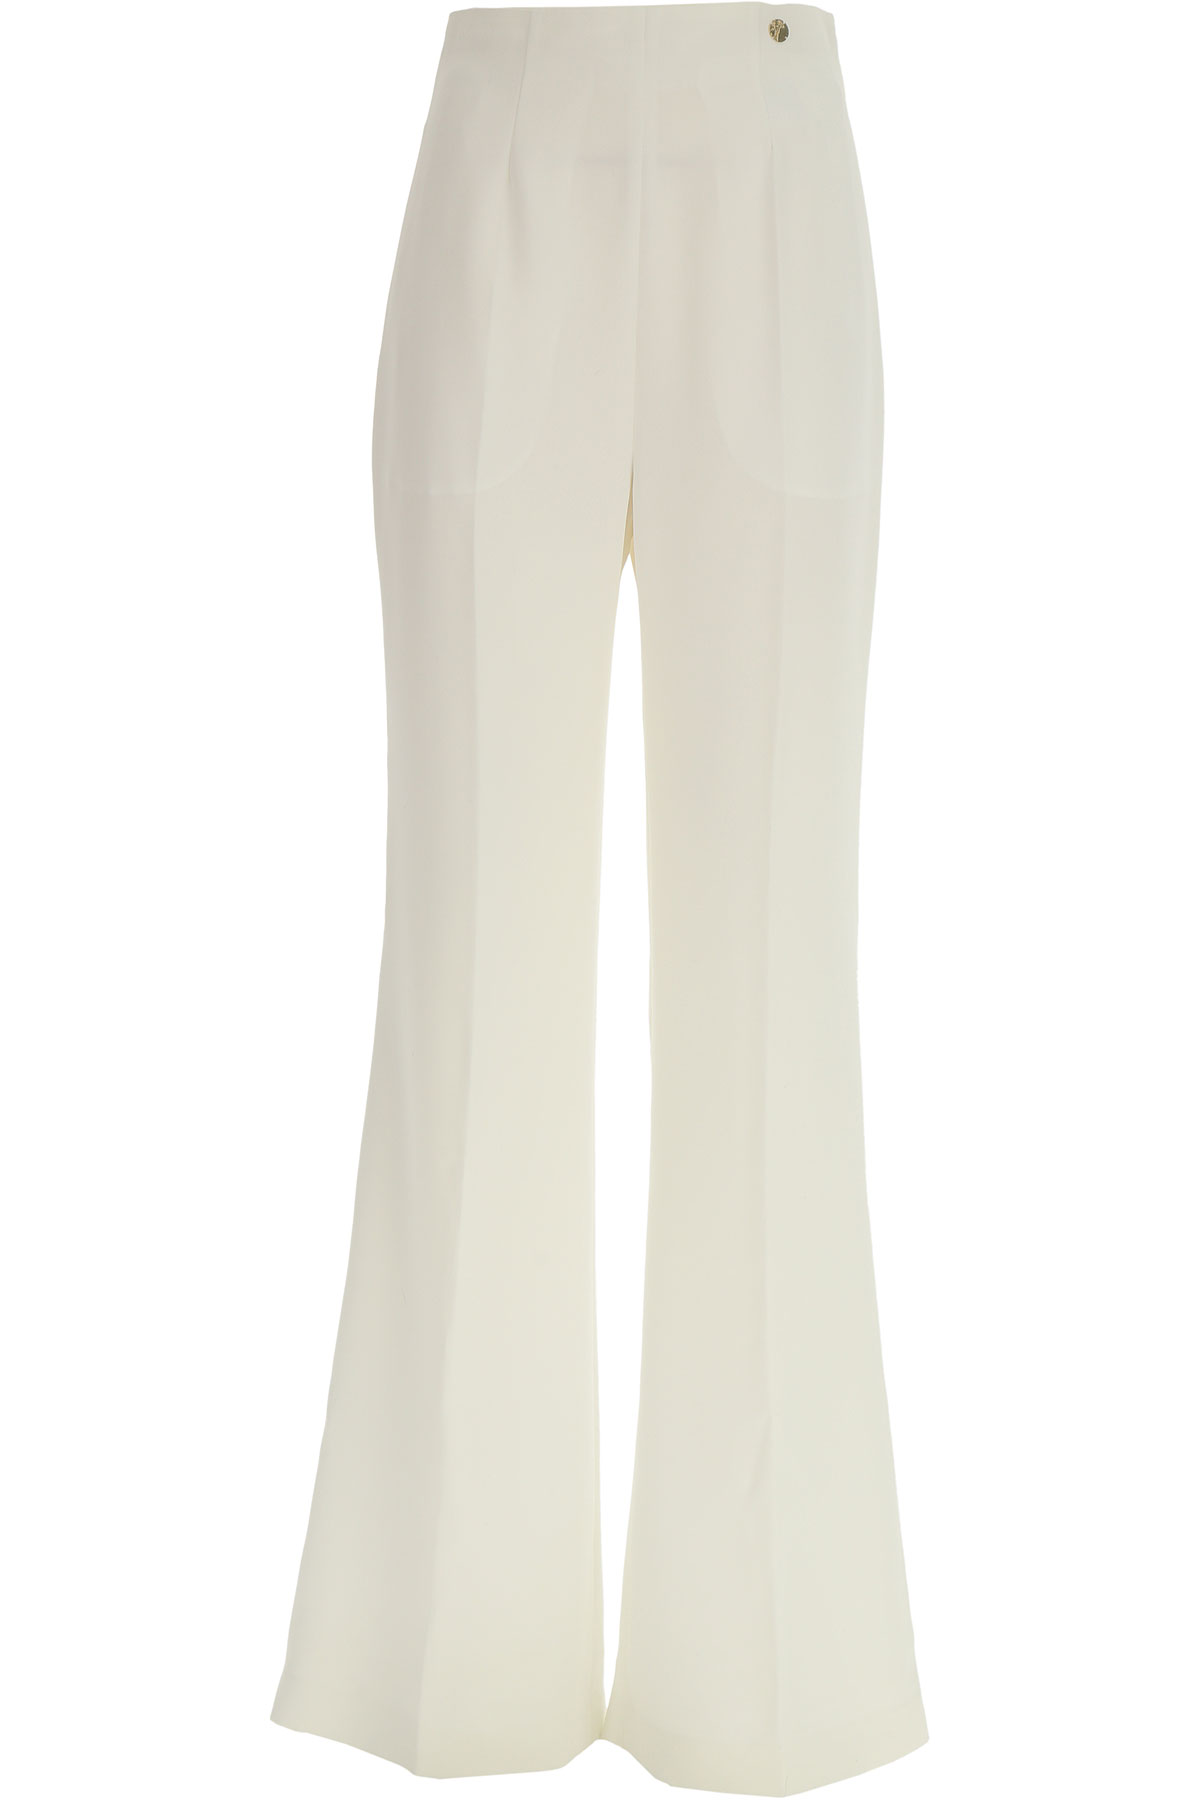 Versace Pantalon Femme, Blanc, Polyester, 2017, 40 42 44 46